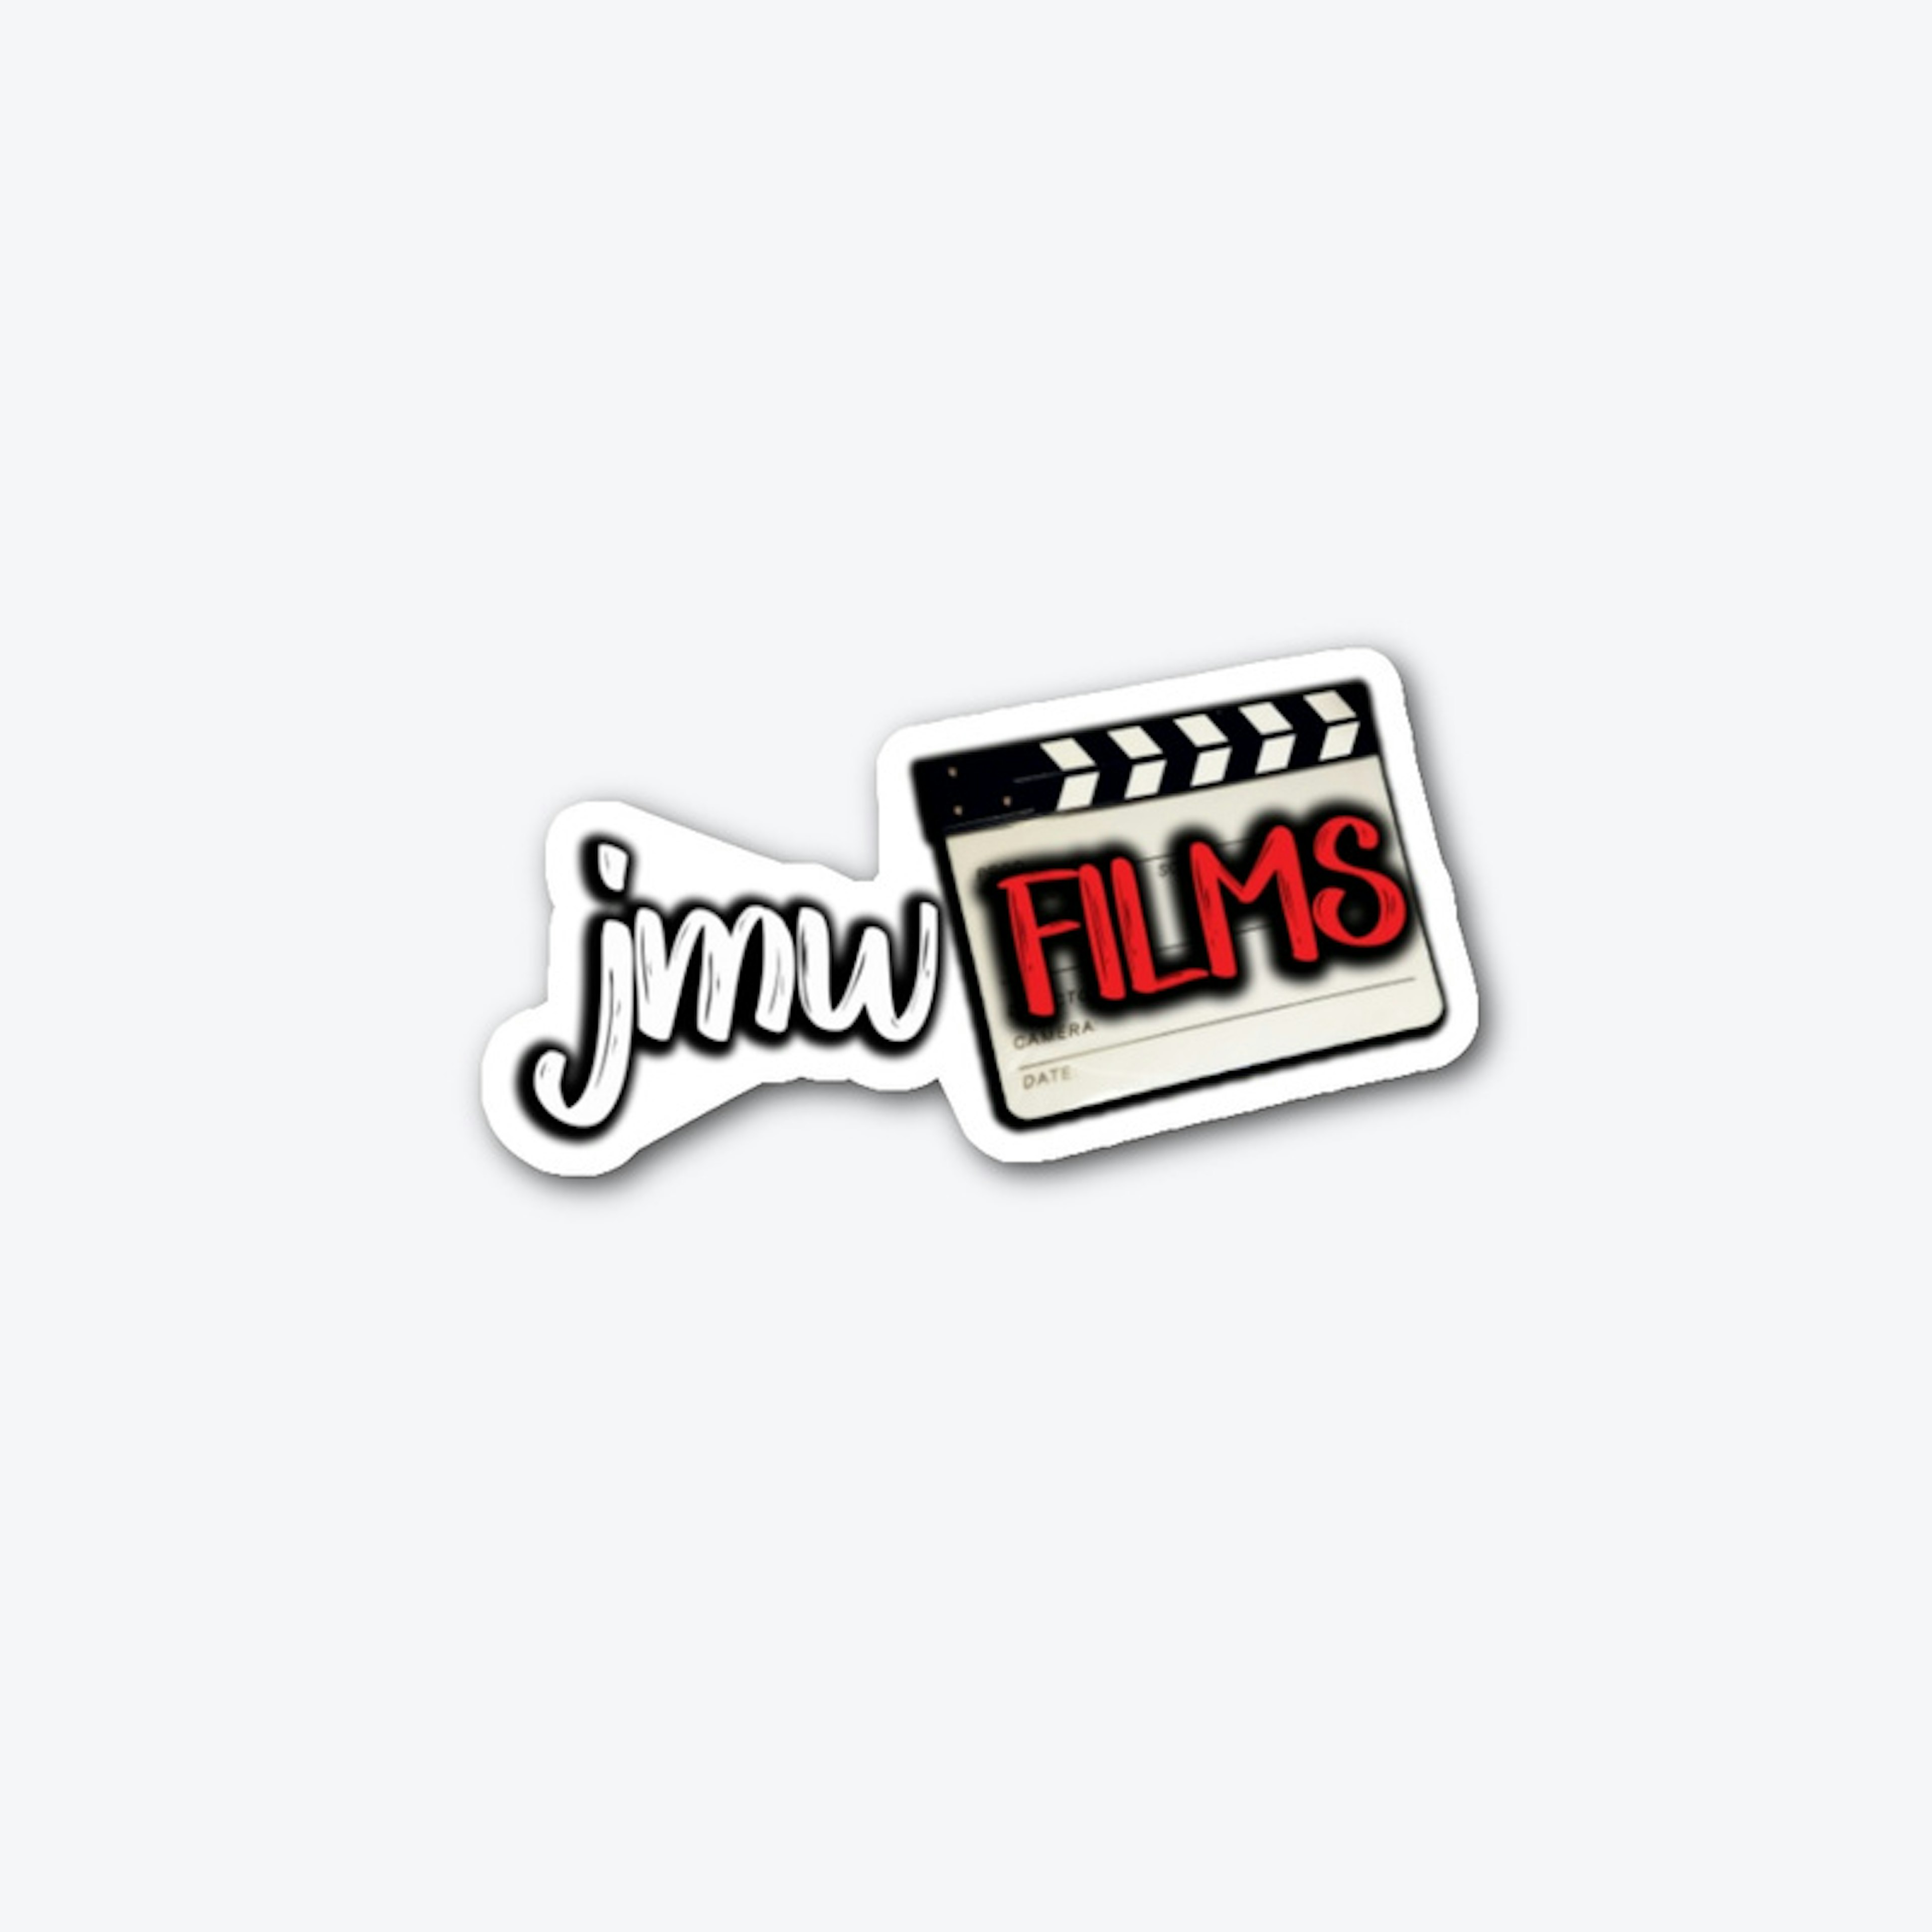 jmwFILMS sticker